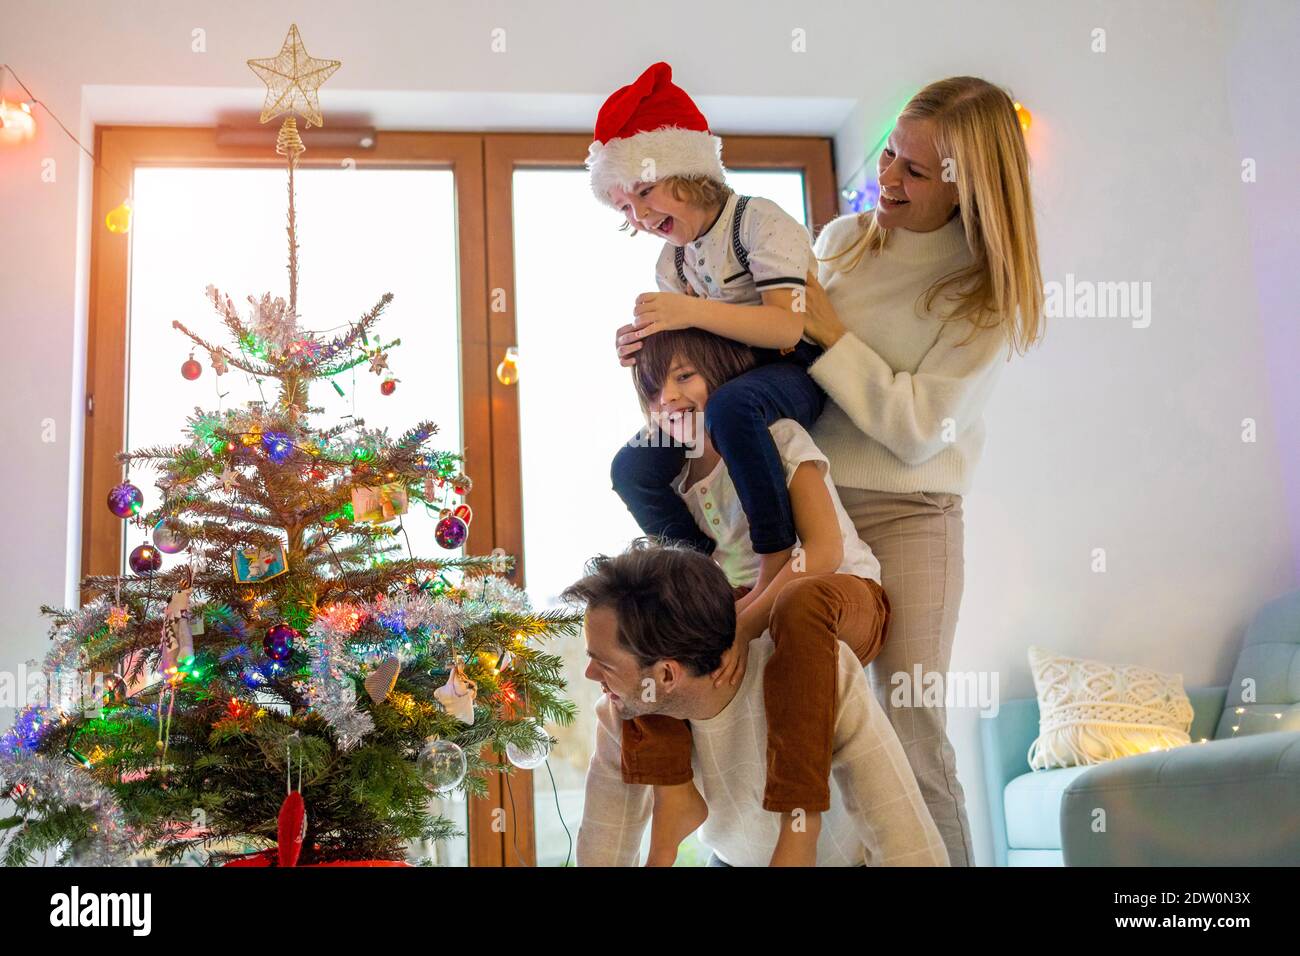 Young family having fun decorating Christmas tree Stock Photo